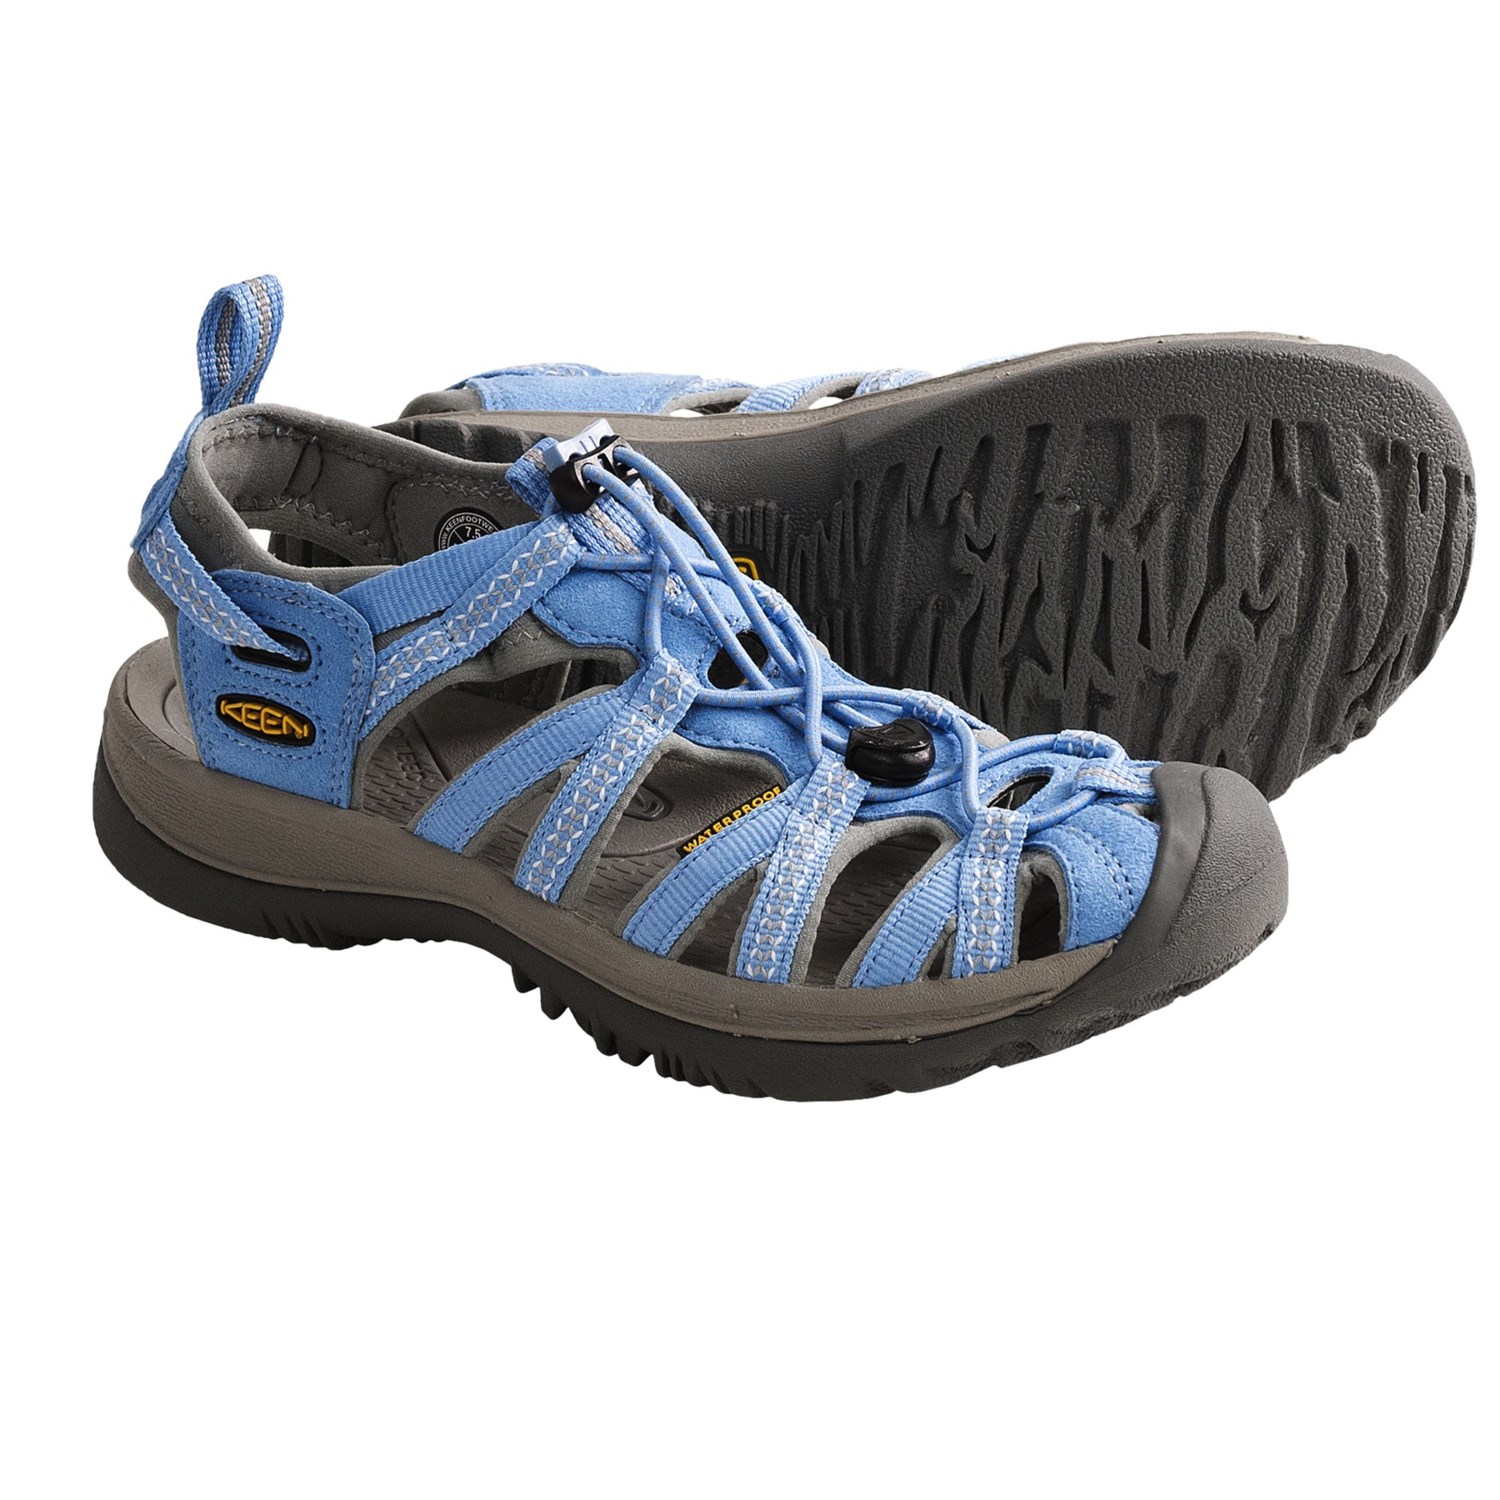 Keen Whisper Sport Sandals (For Women) in AllureNeutral Grey